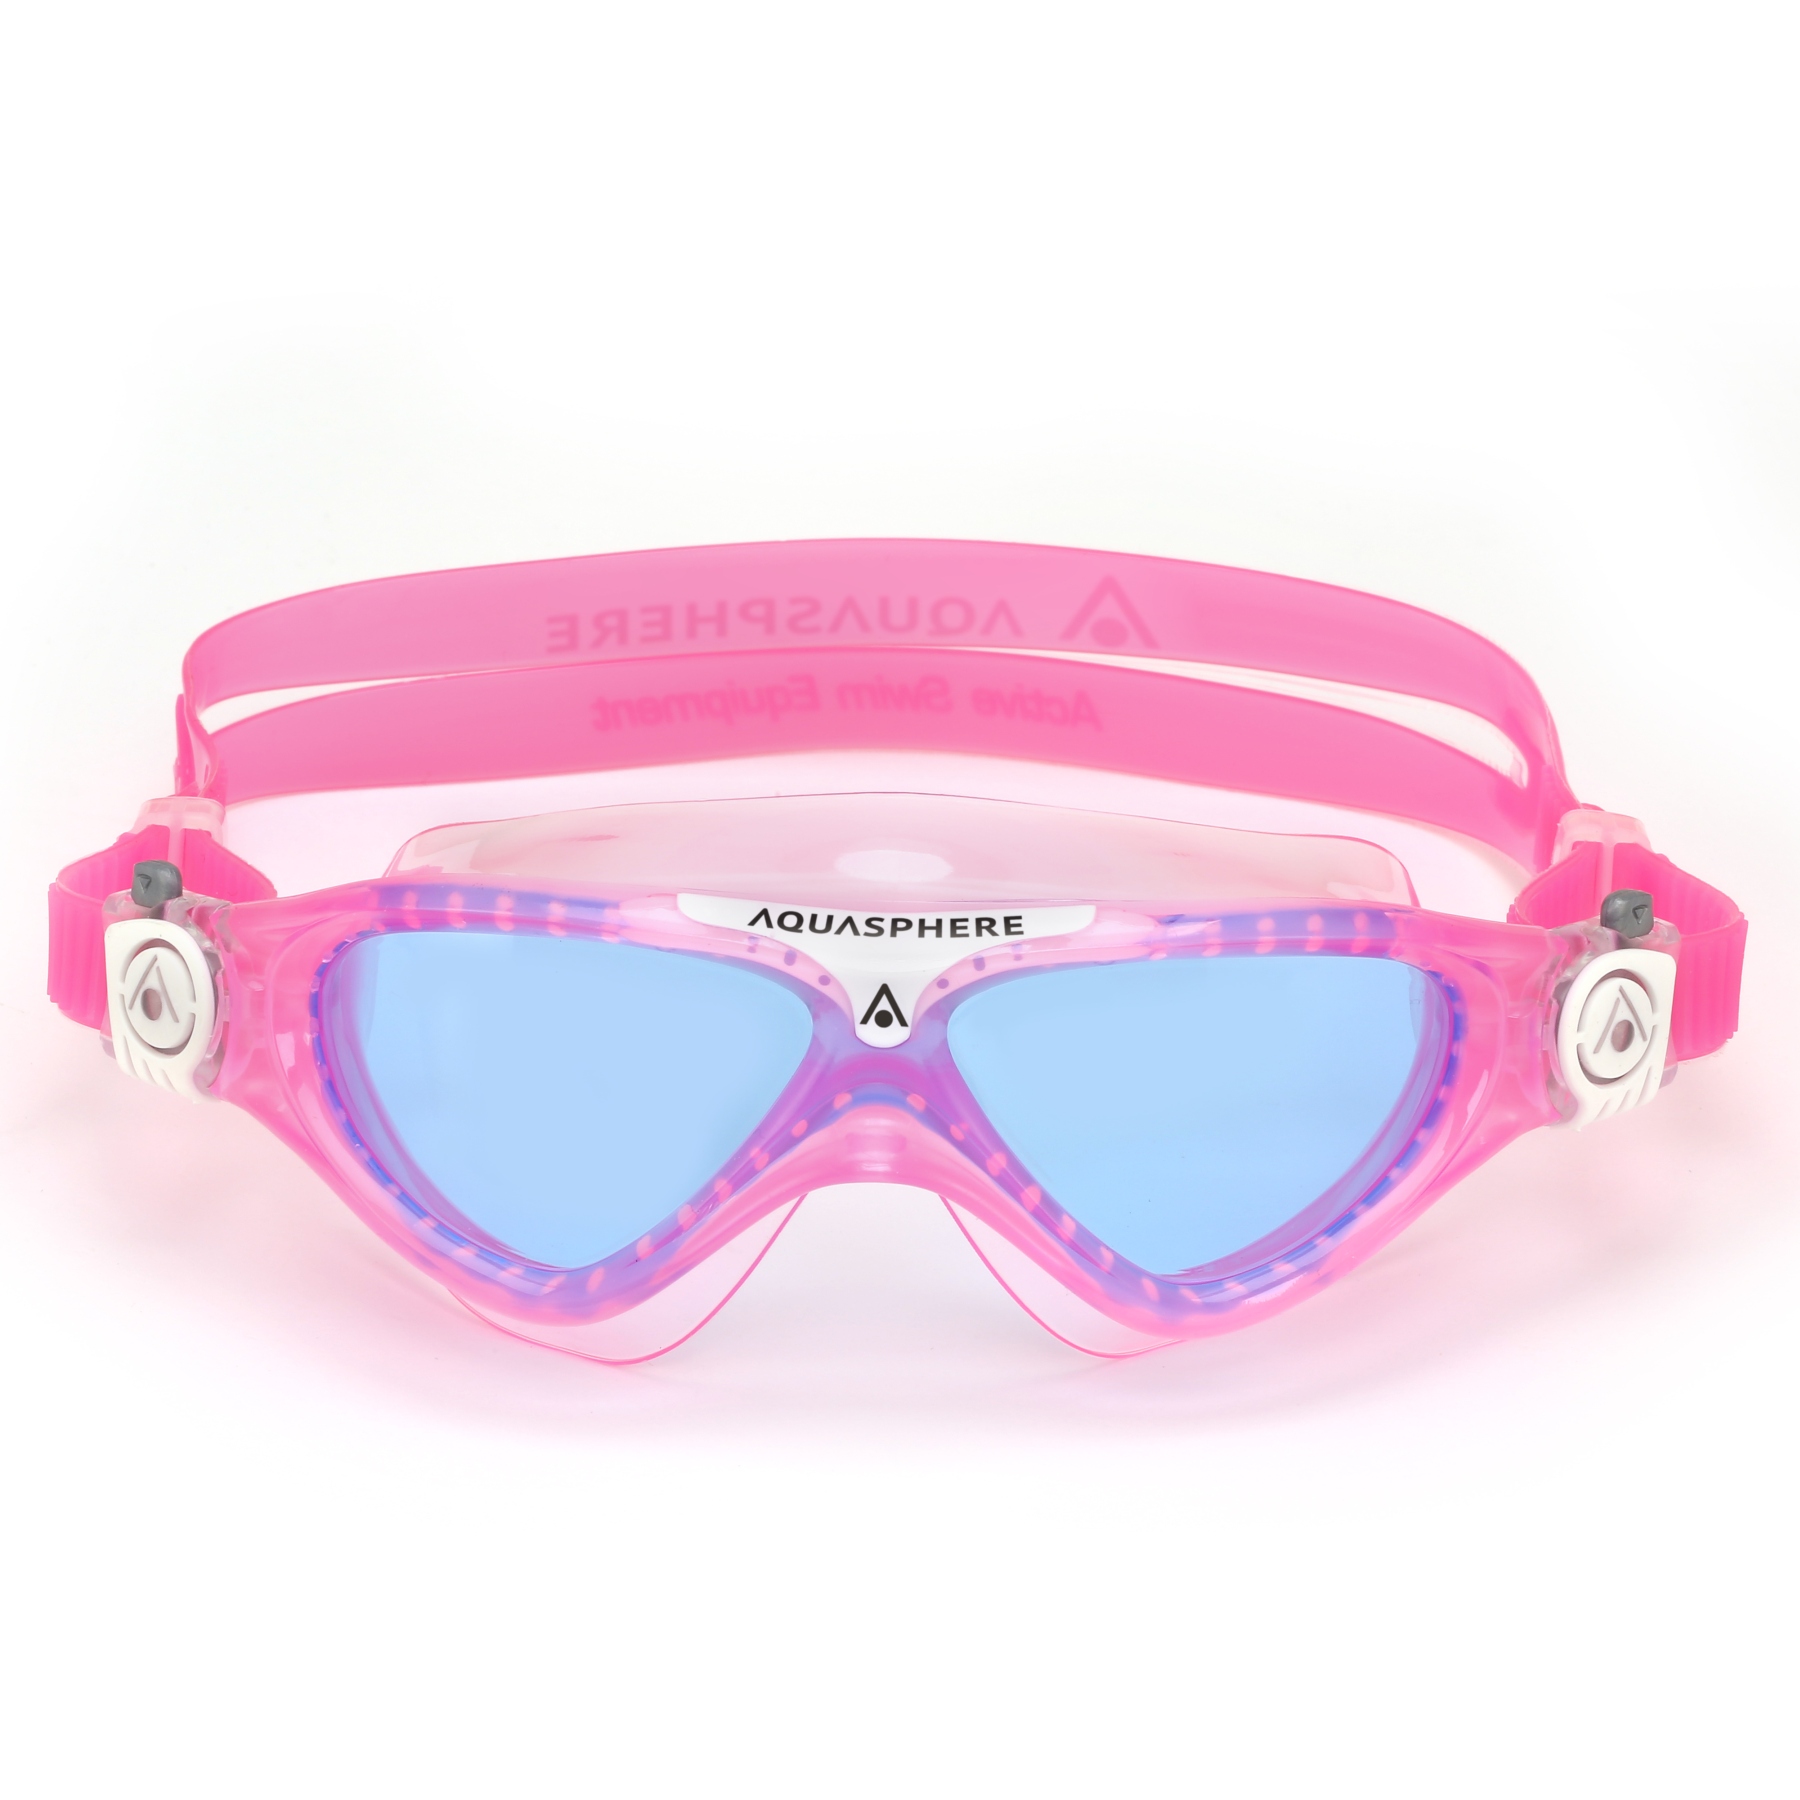 Picture of AQUASPHERE Vista Junior Kids Swim Goggles - Blue Tinted - Pink/White